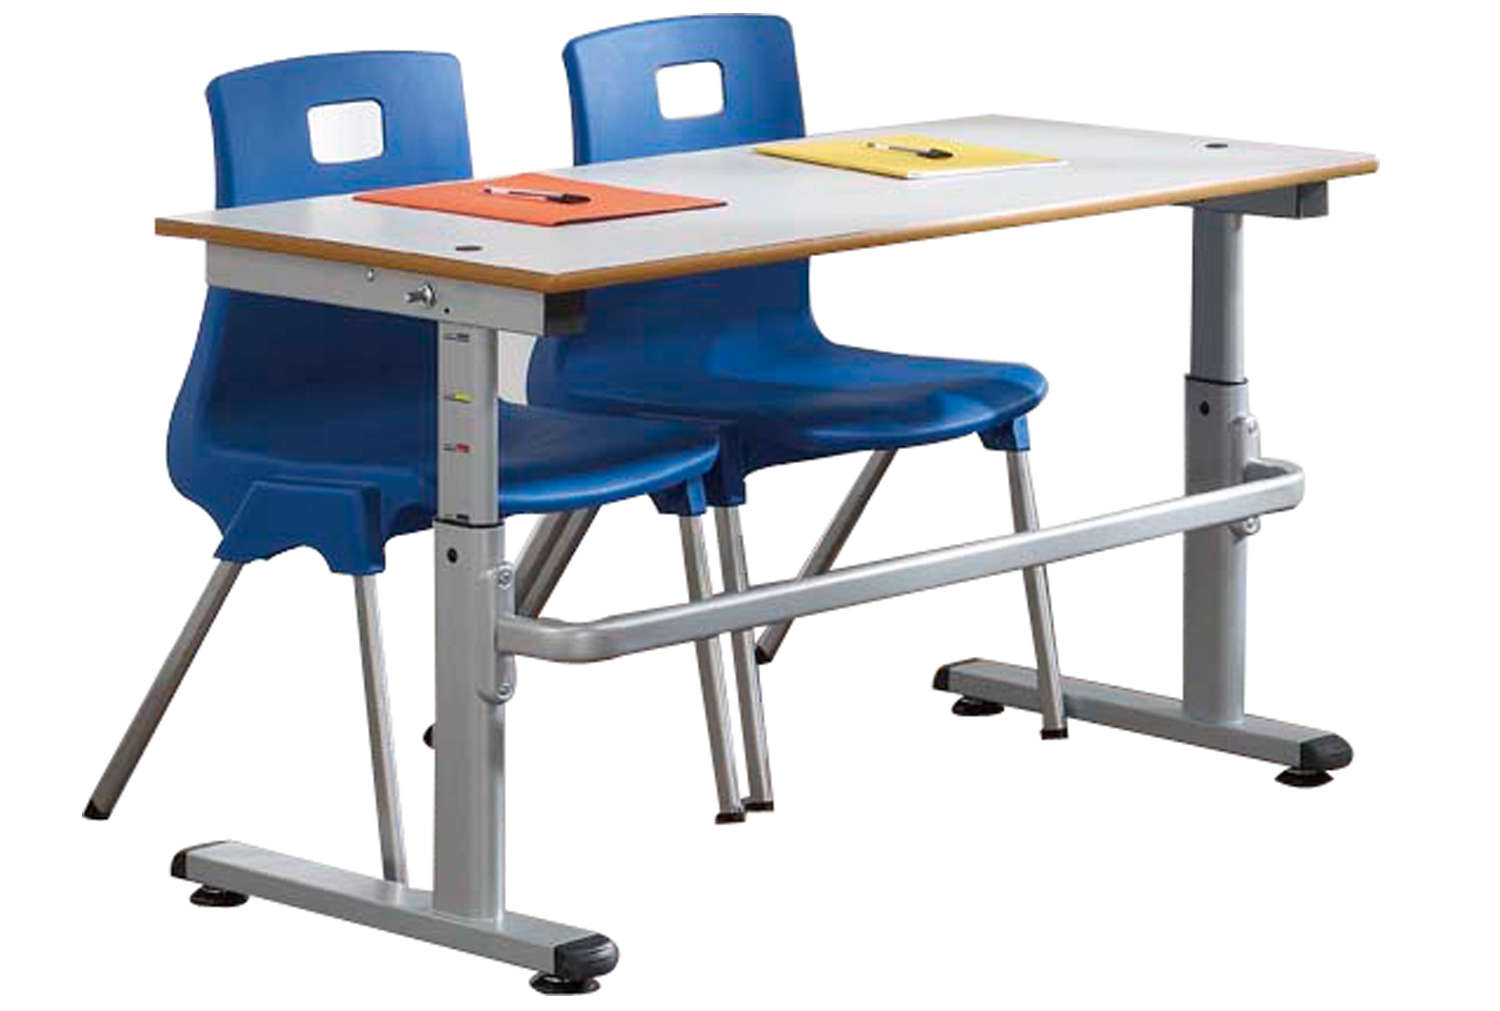 Qty 2 - Height Adjustable Classroom Tables, 120wx60d (cm), Grey Top, PU Light Grey Edge